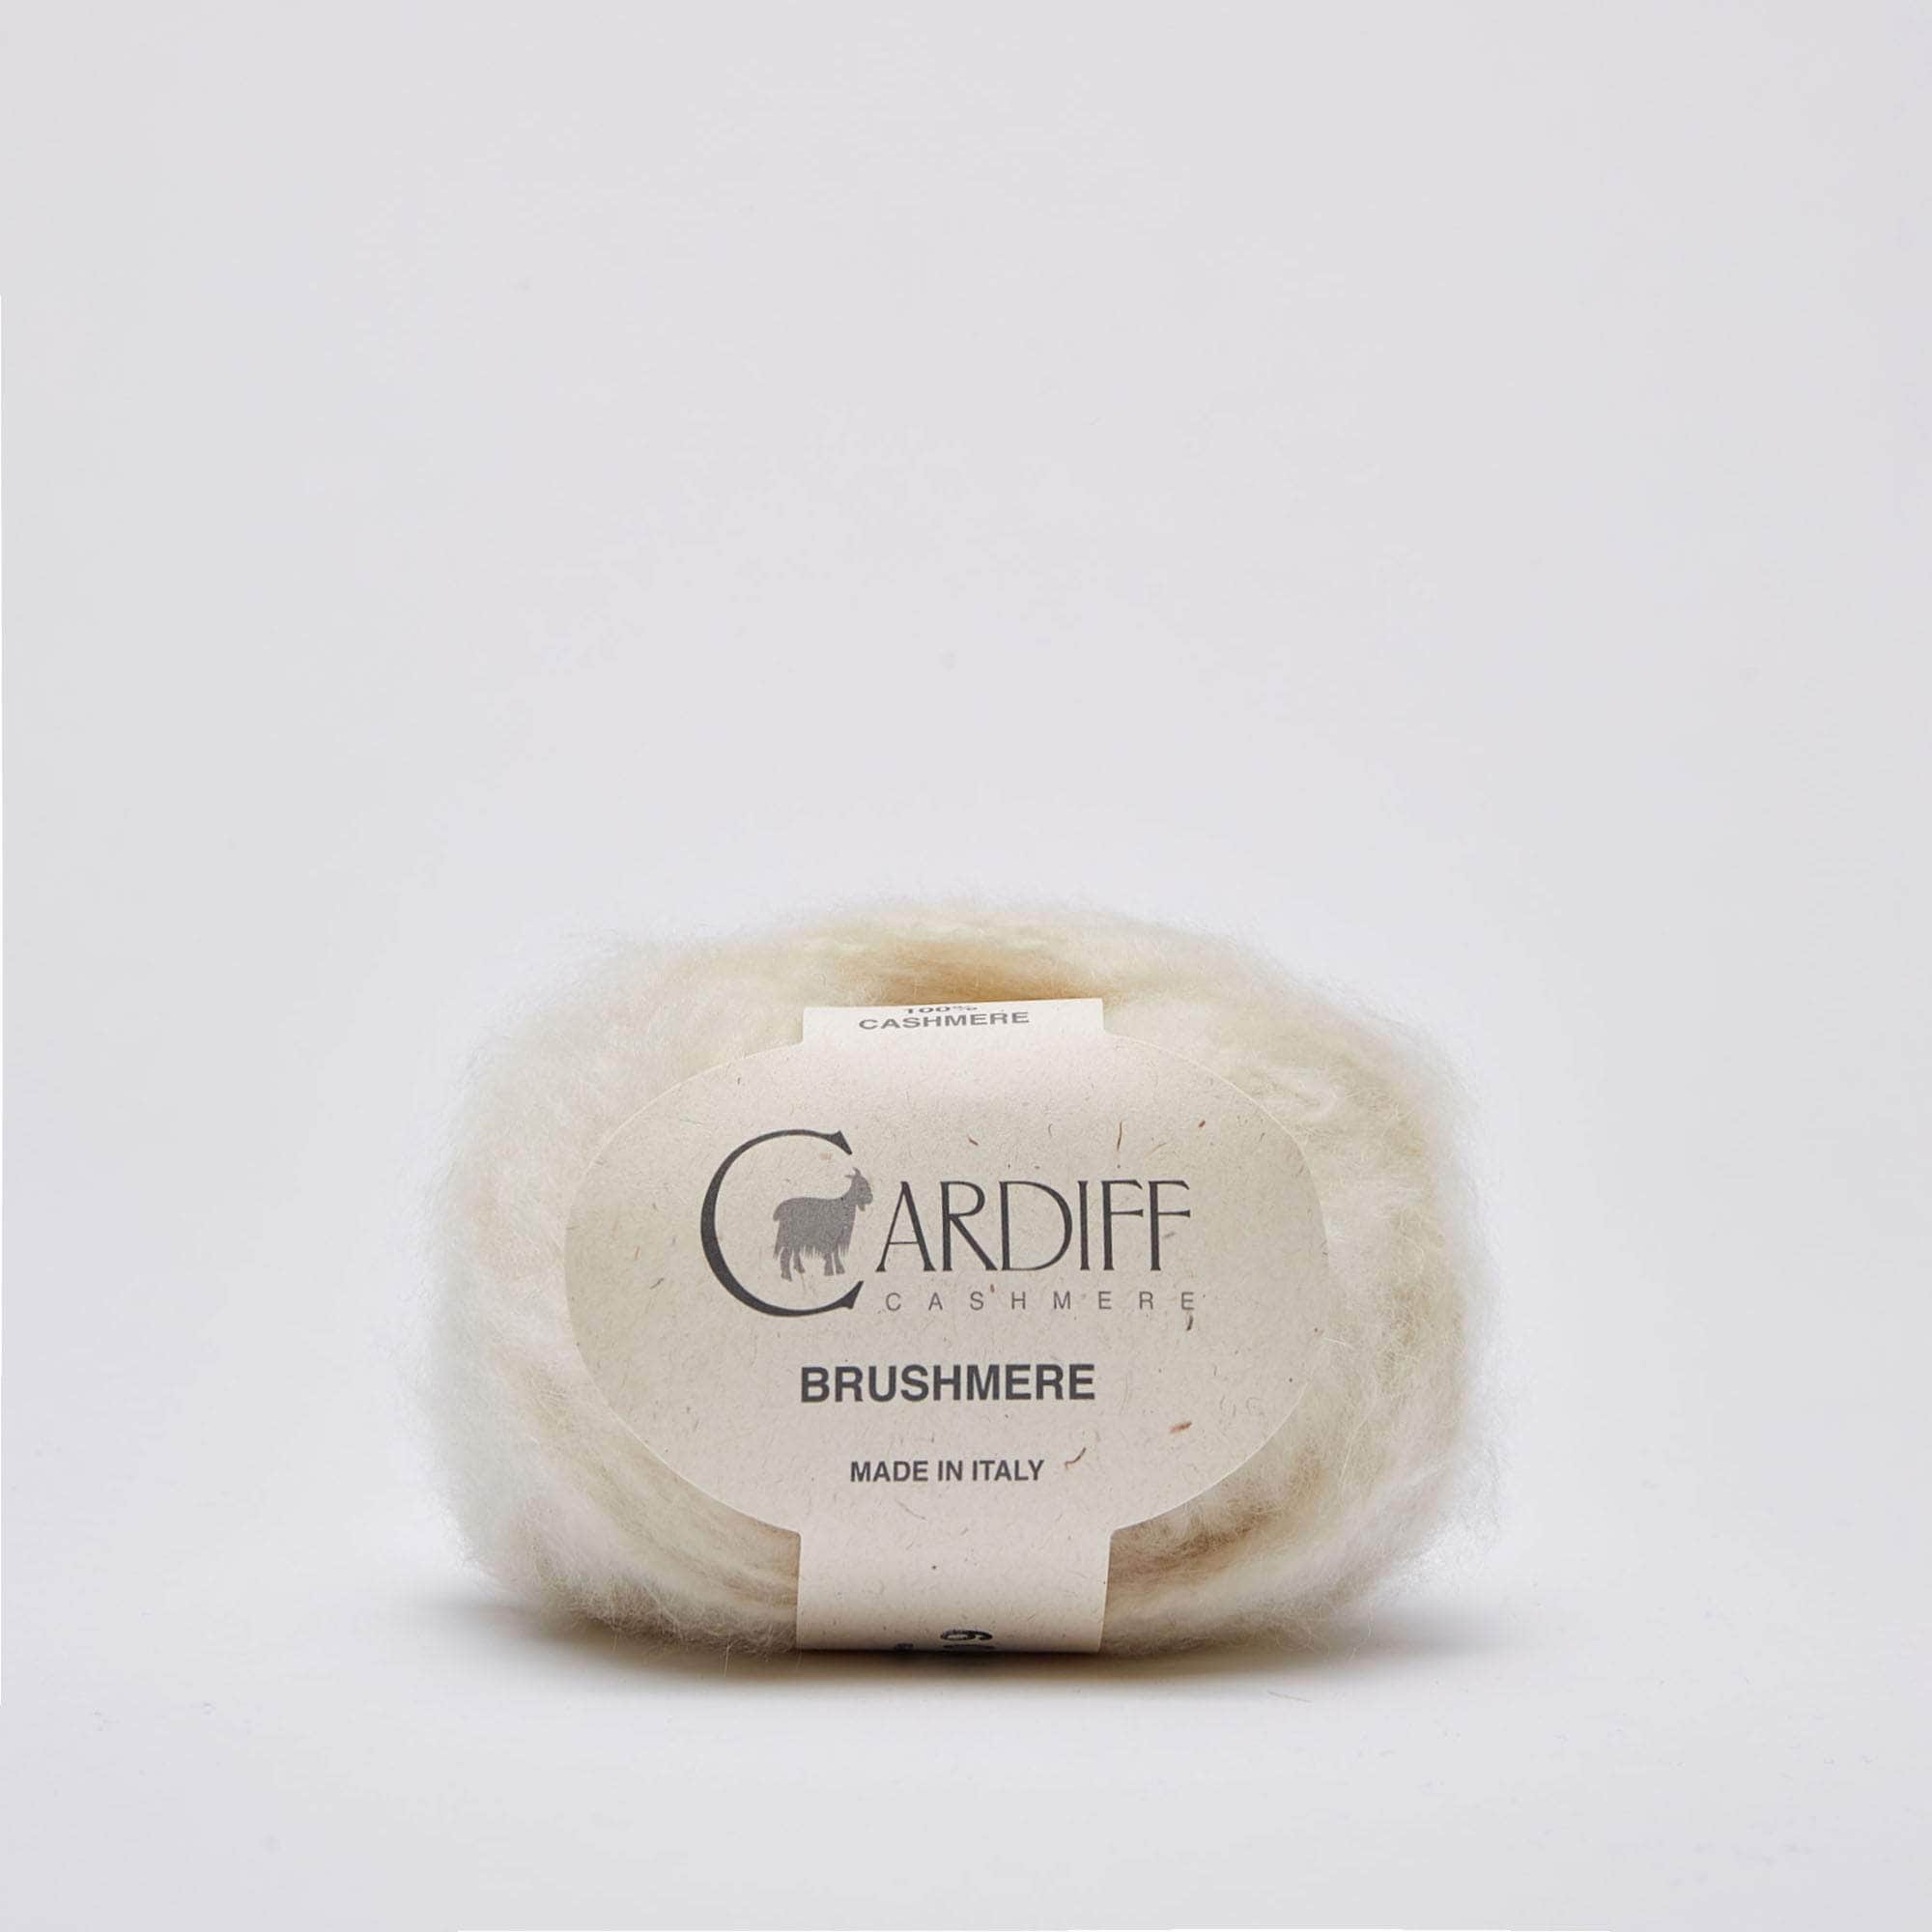 CARDIFF CASHMERE Garn 101 - WHITE Brushmere